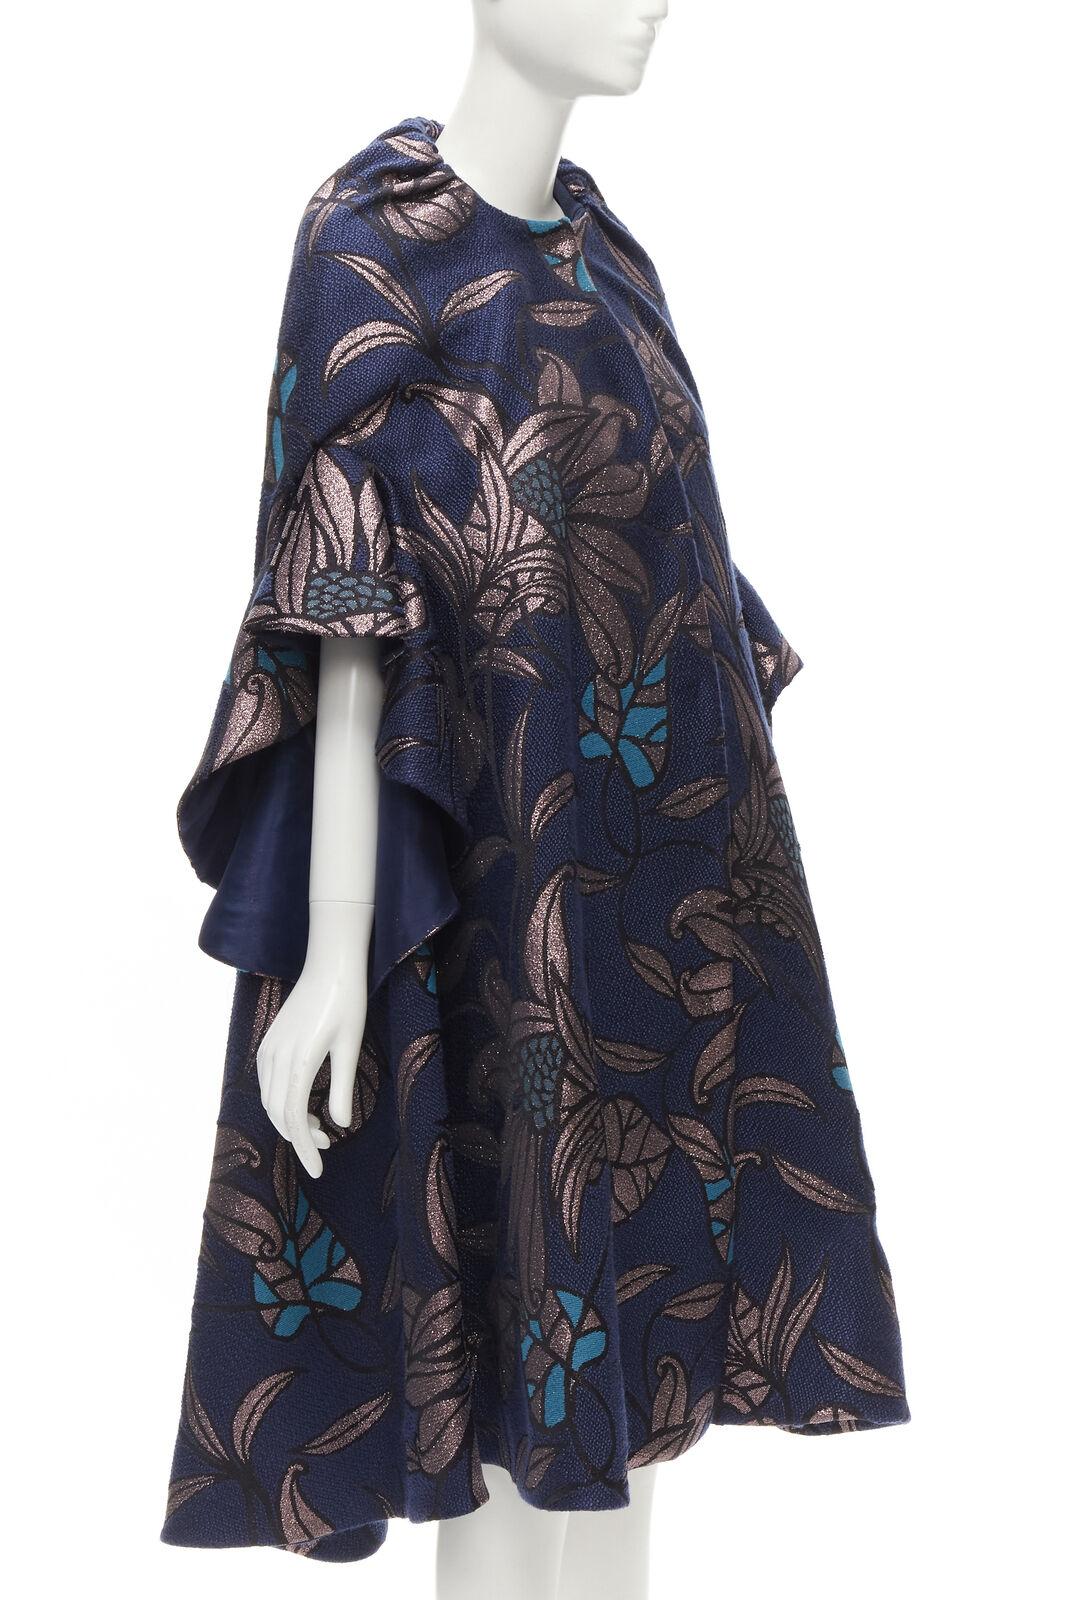 Women's DELPOZO navy bluemetallic floral jacquard ruffled oversized cape coat FR34 XS